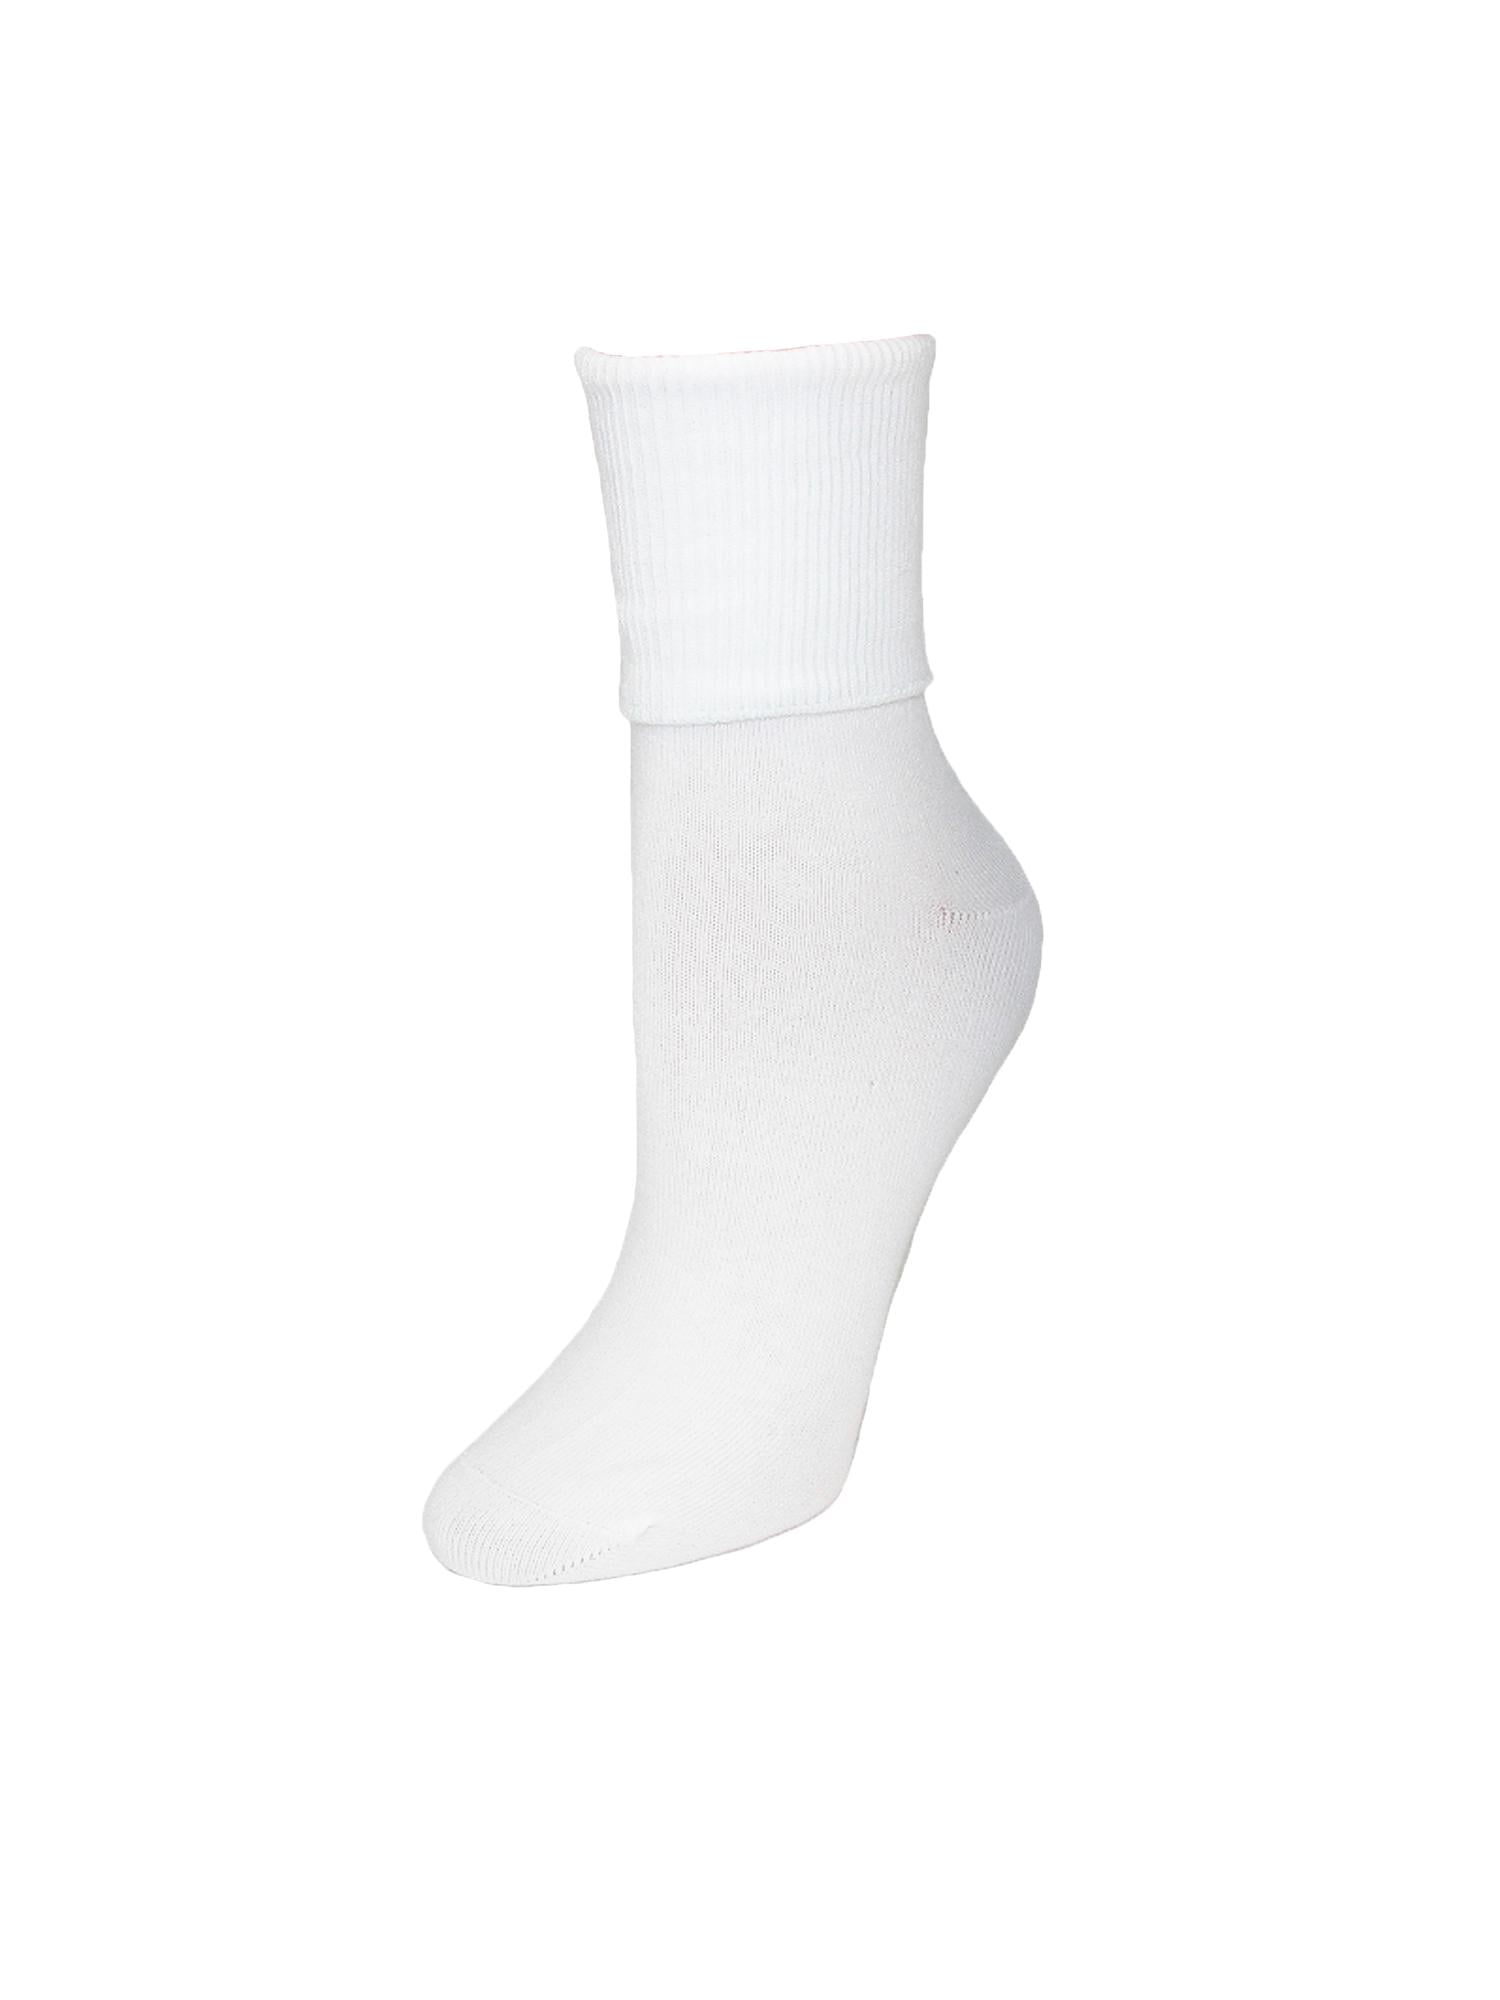 Womens Plus Size Cotton Turn Cuff Sock, White - Walmart.com